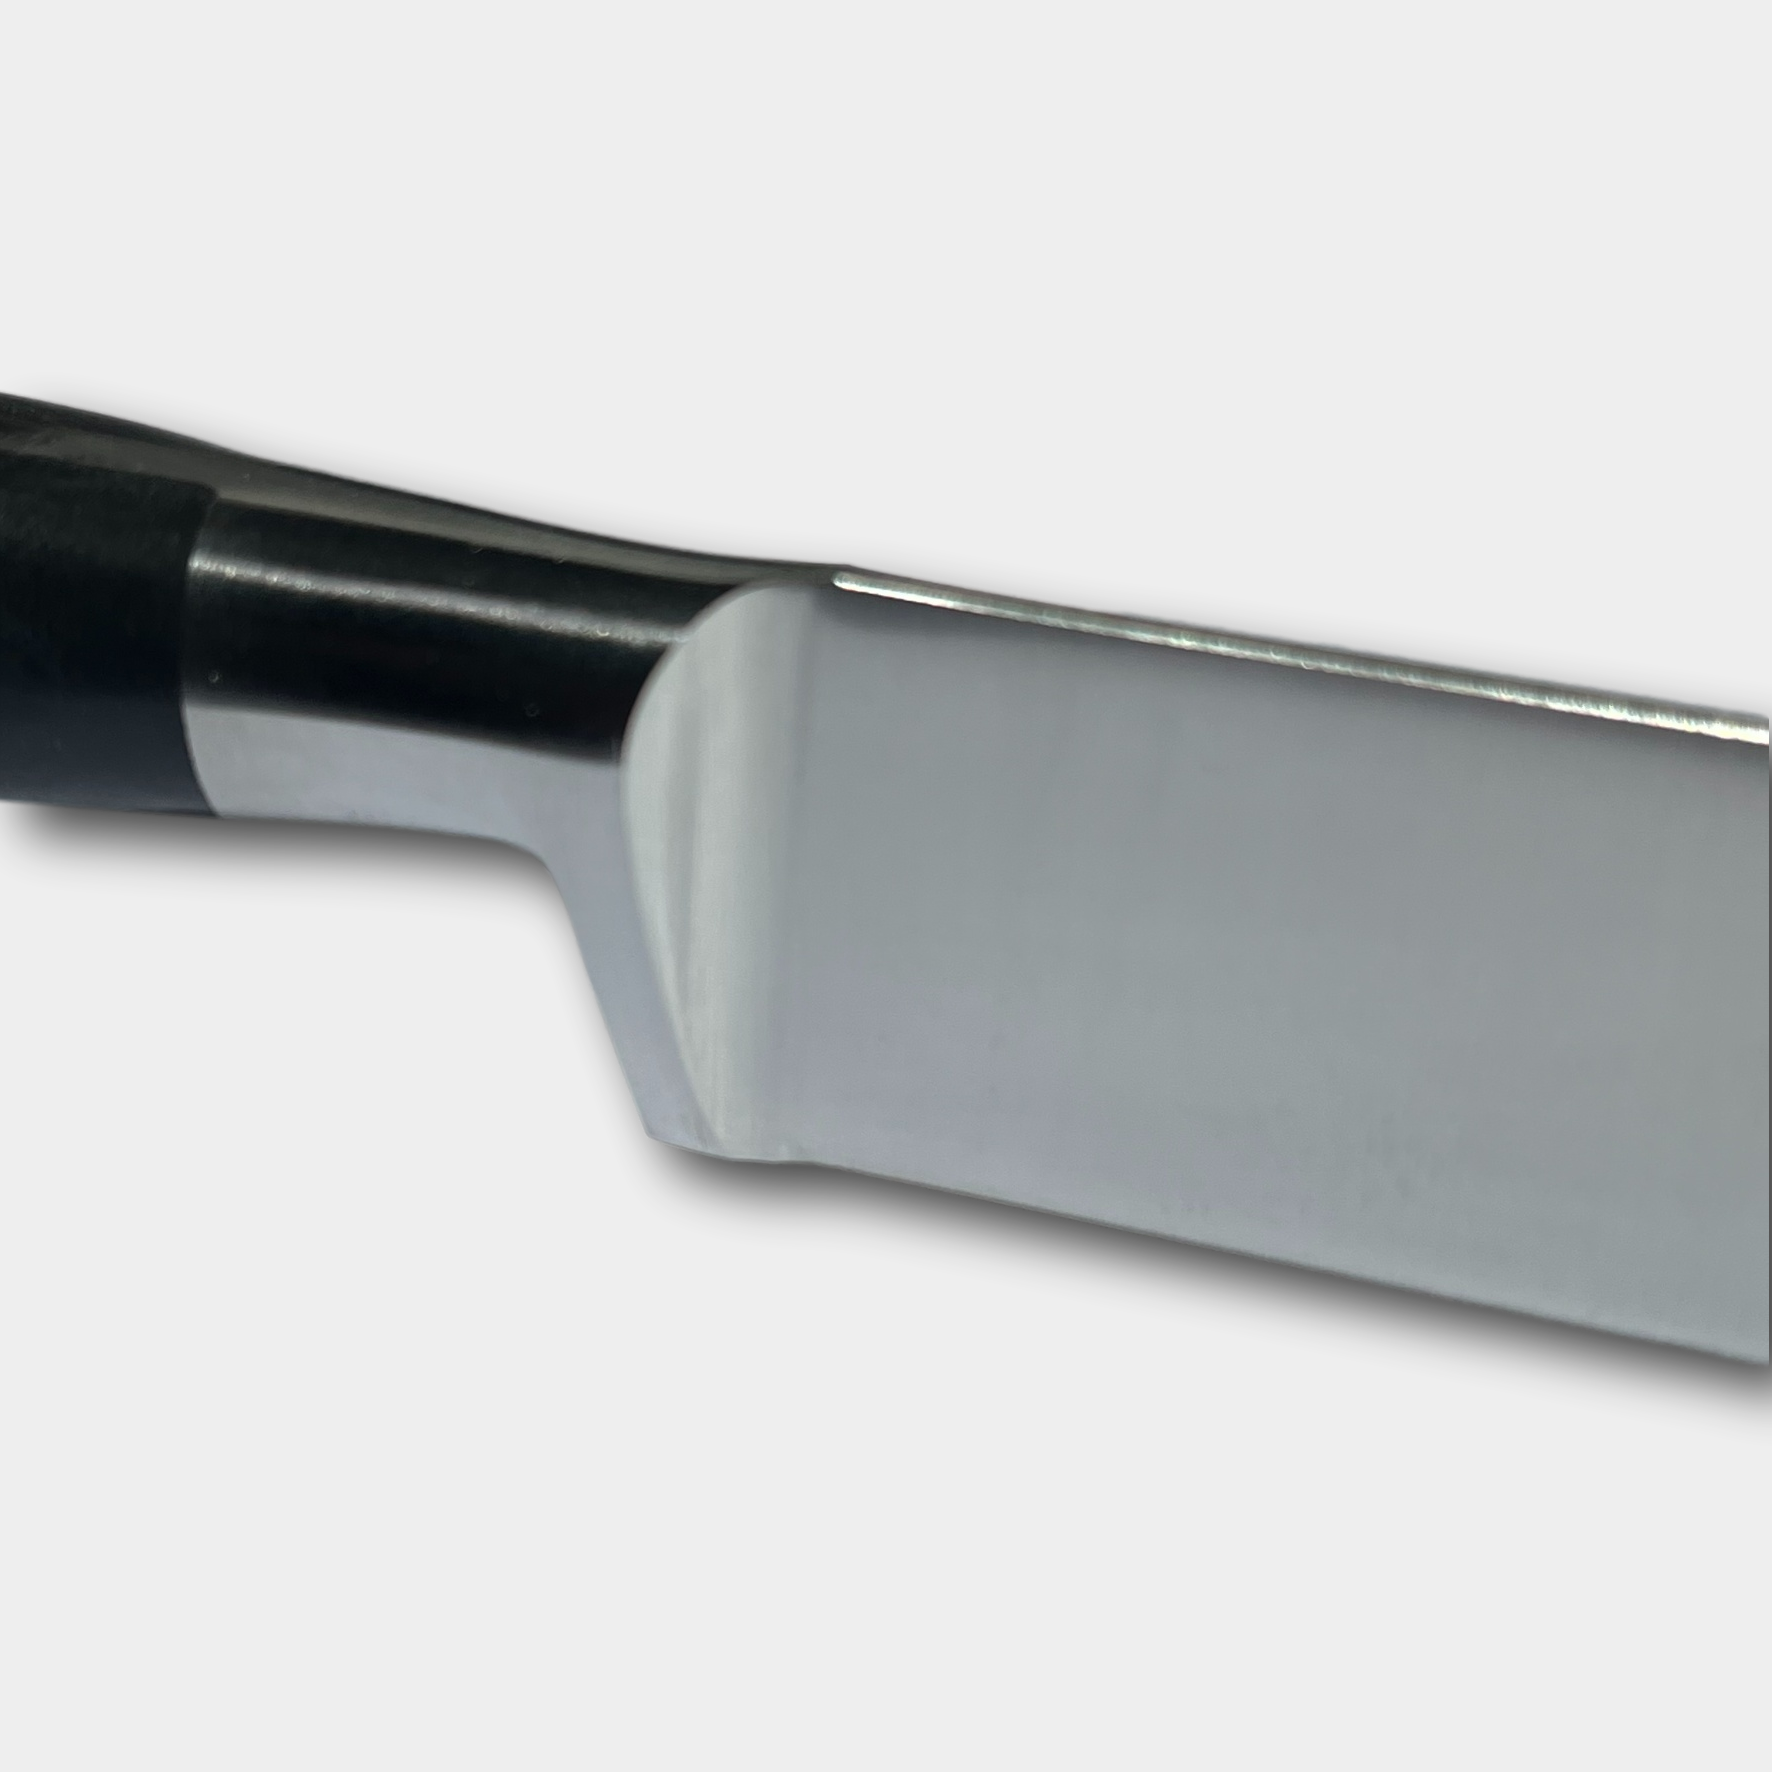 Lion Sabtier Ideal Steel 20cm Yatagan Slicing Knife